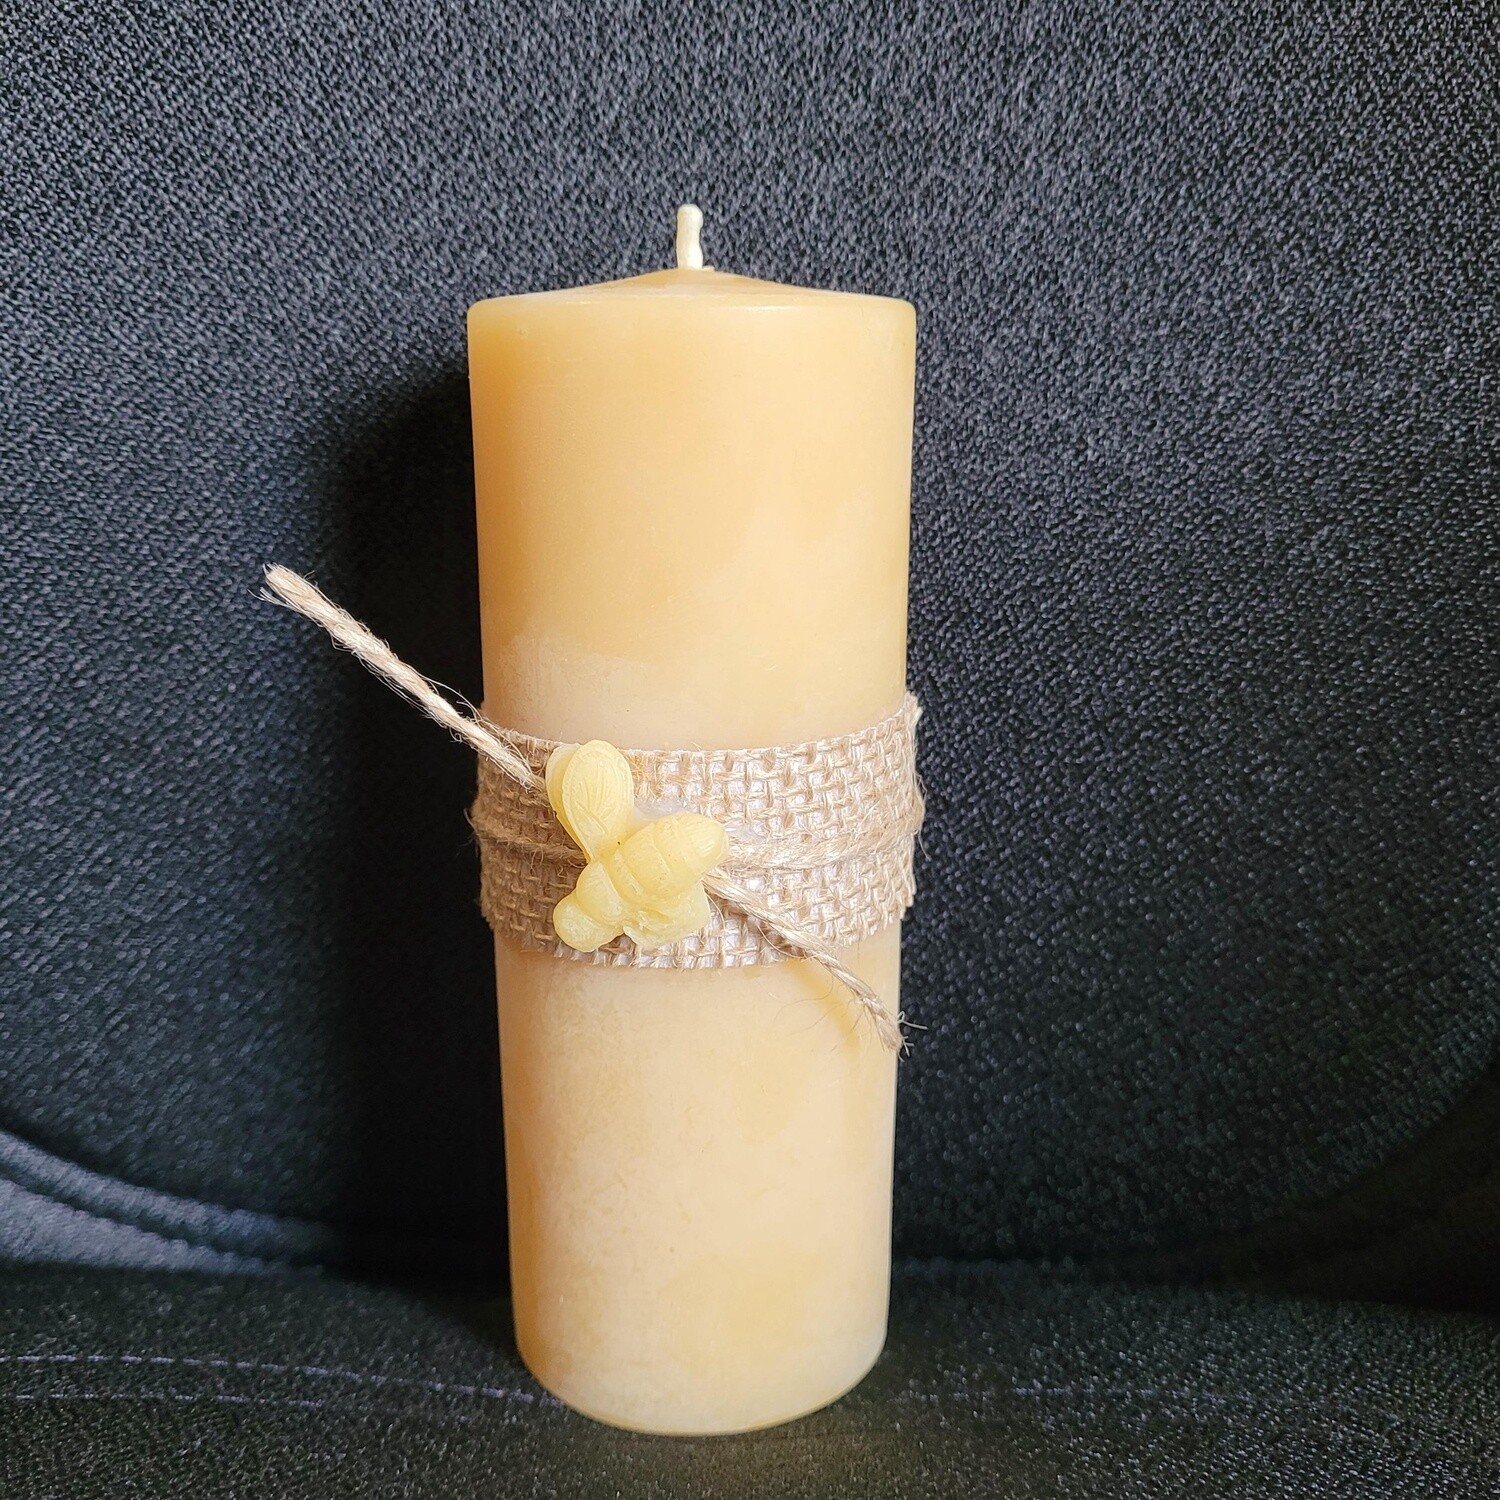 Pillar candle - Chandelle pilier